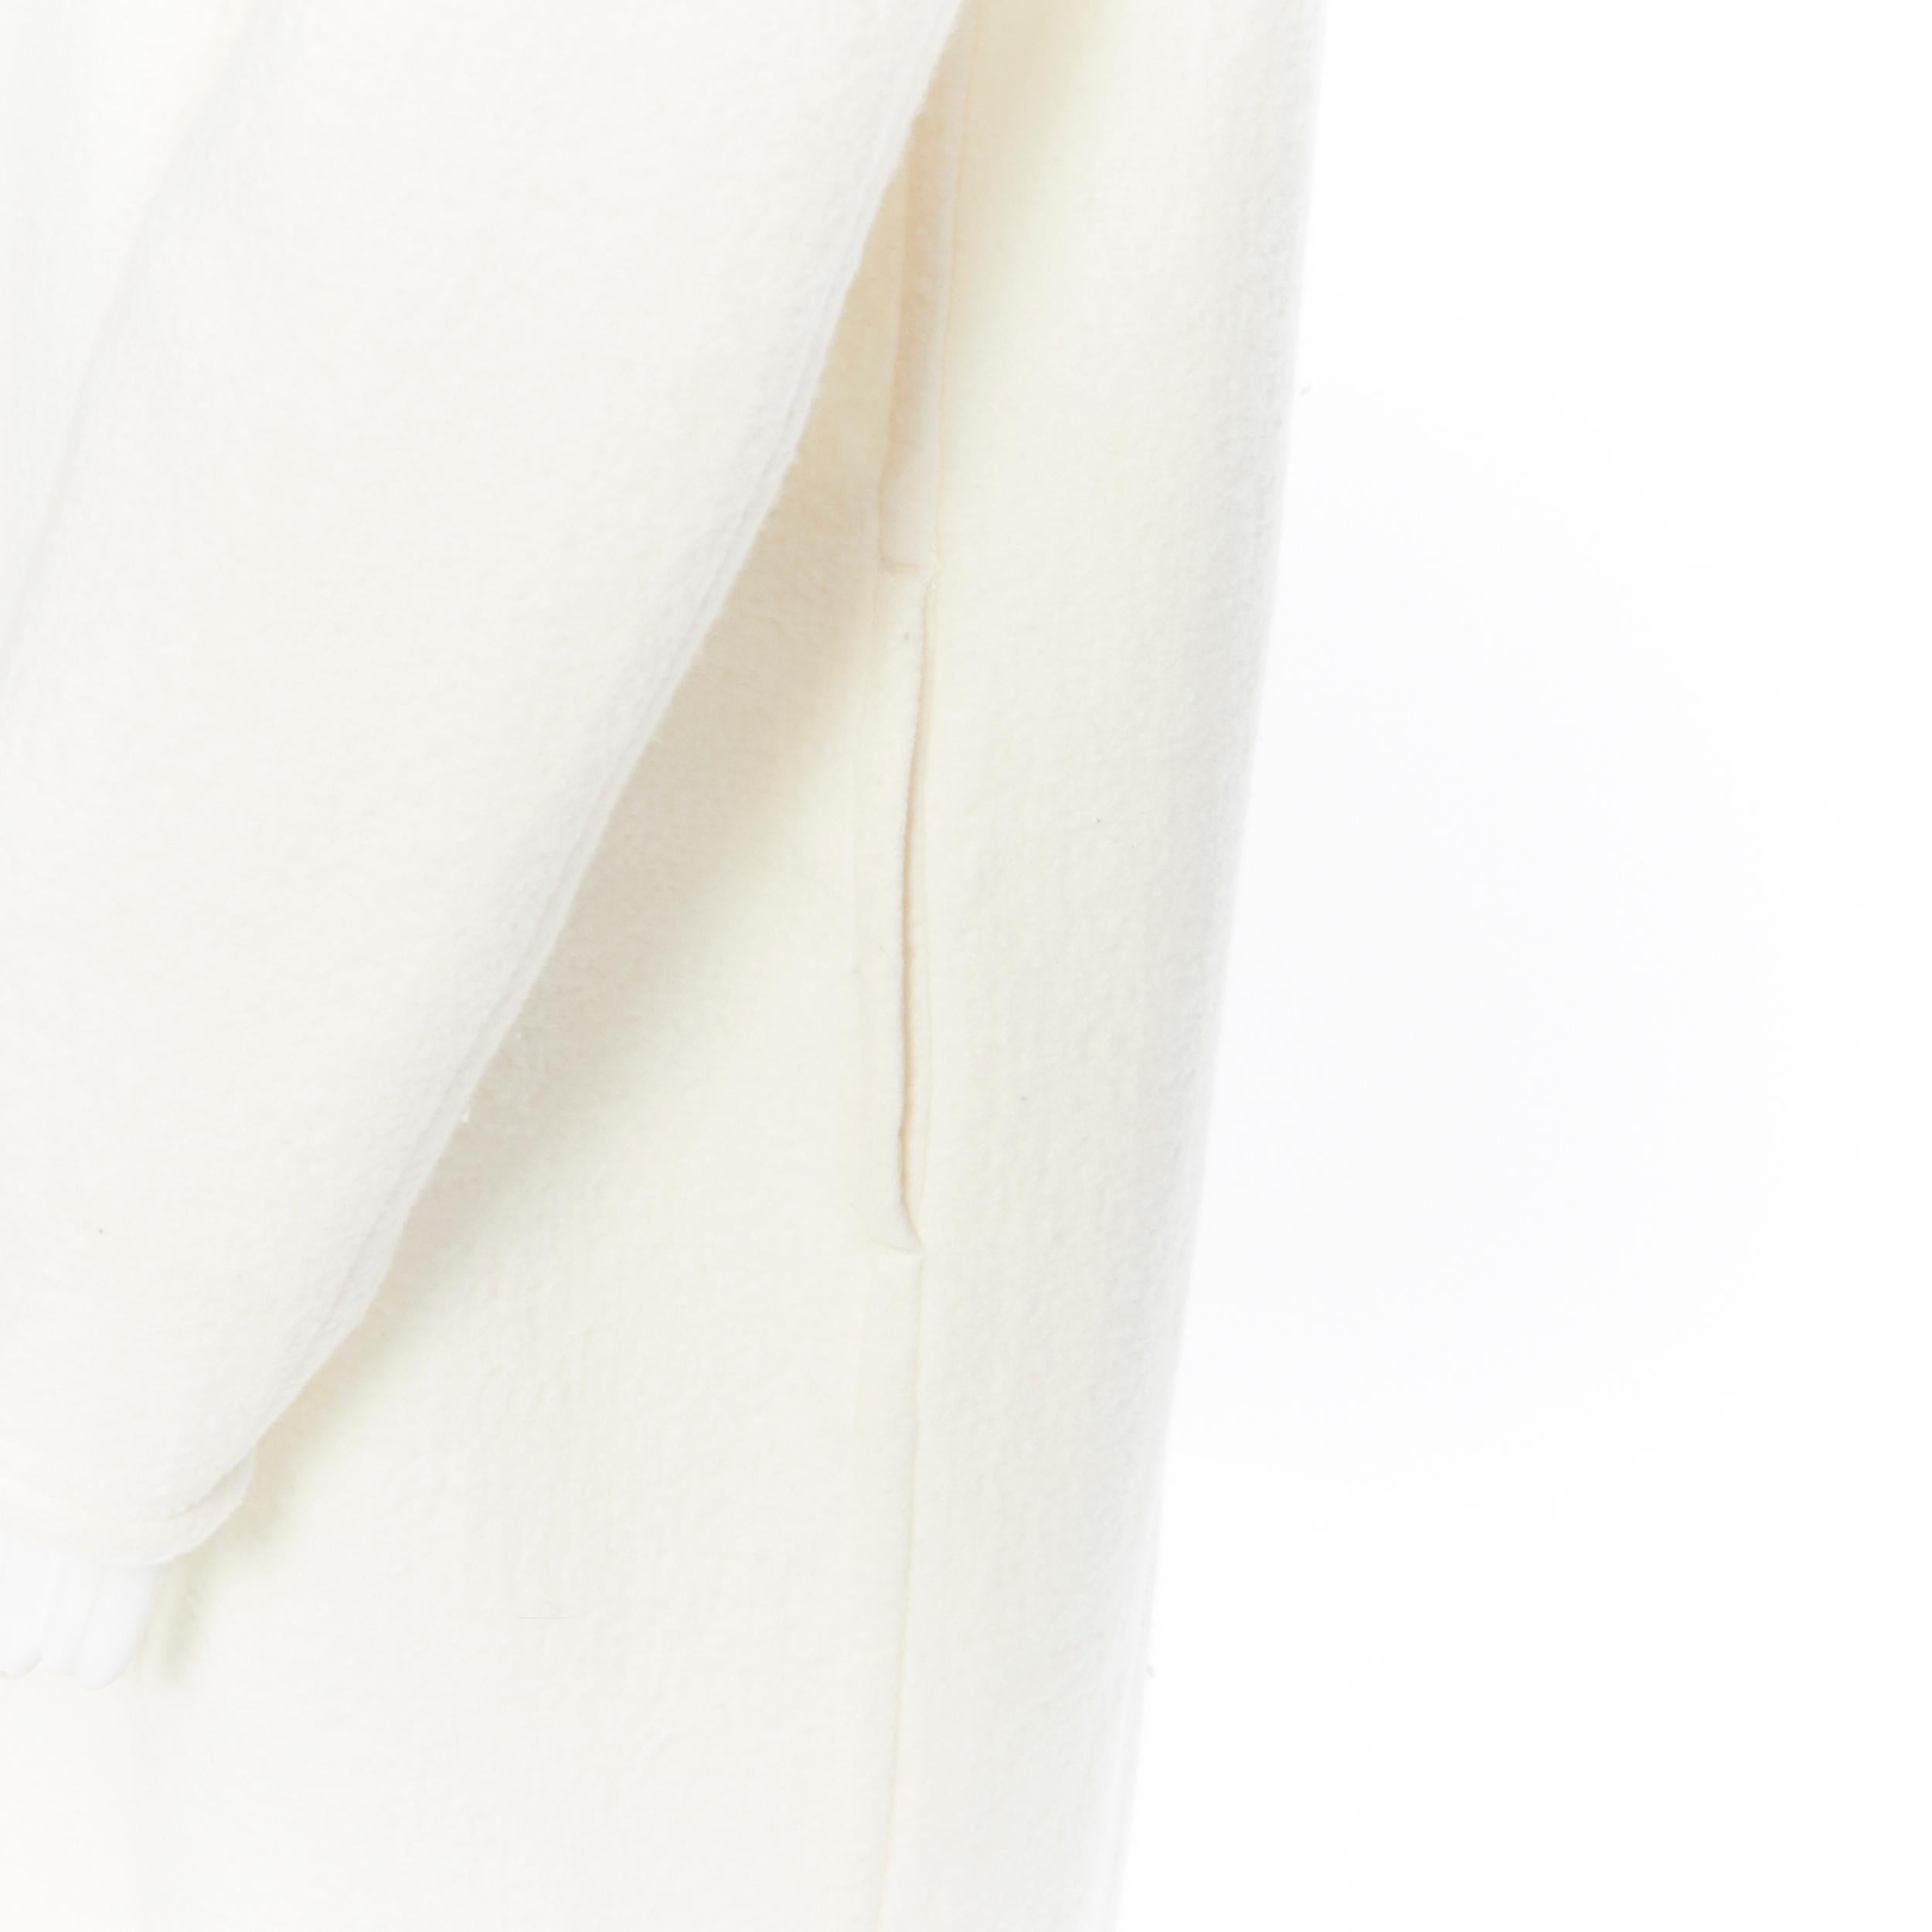 CELINE PHOEBE PHILO cream white 100% boiled wool minimalist cocoon coat FR38 M 2